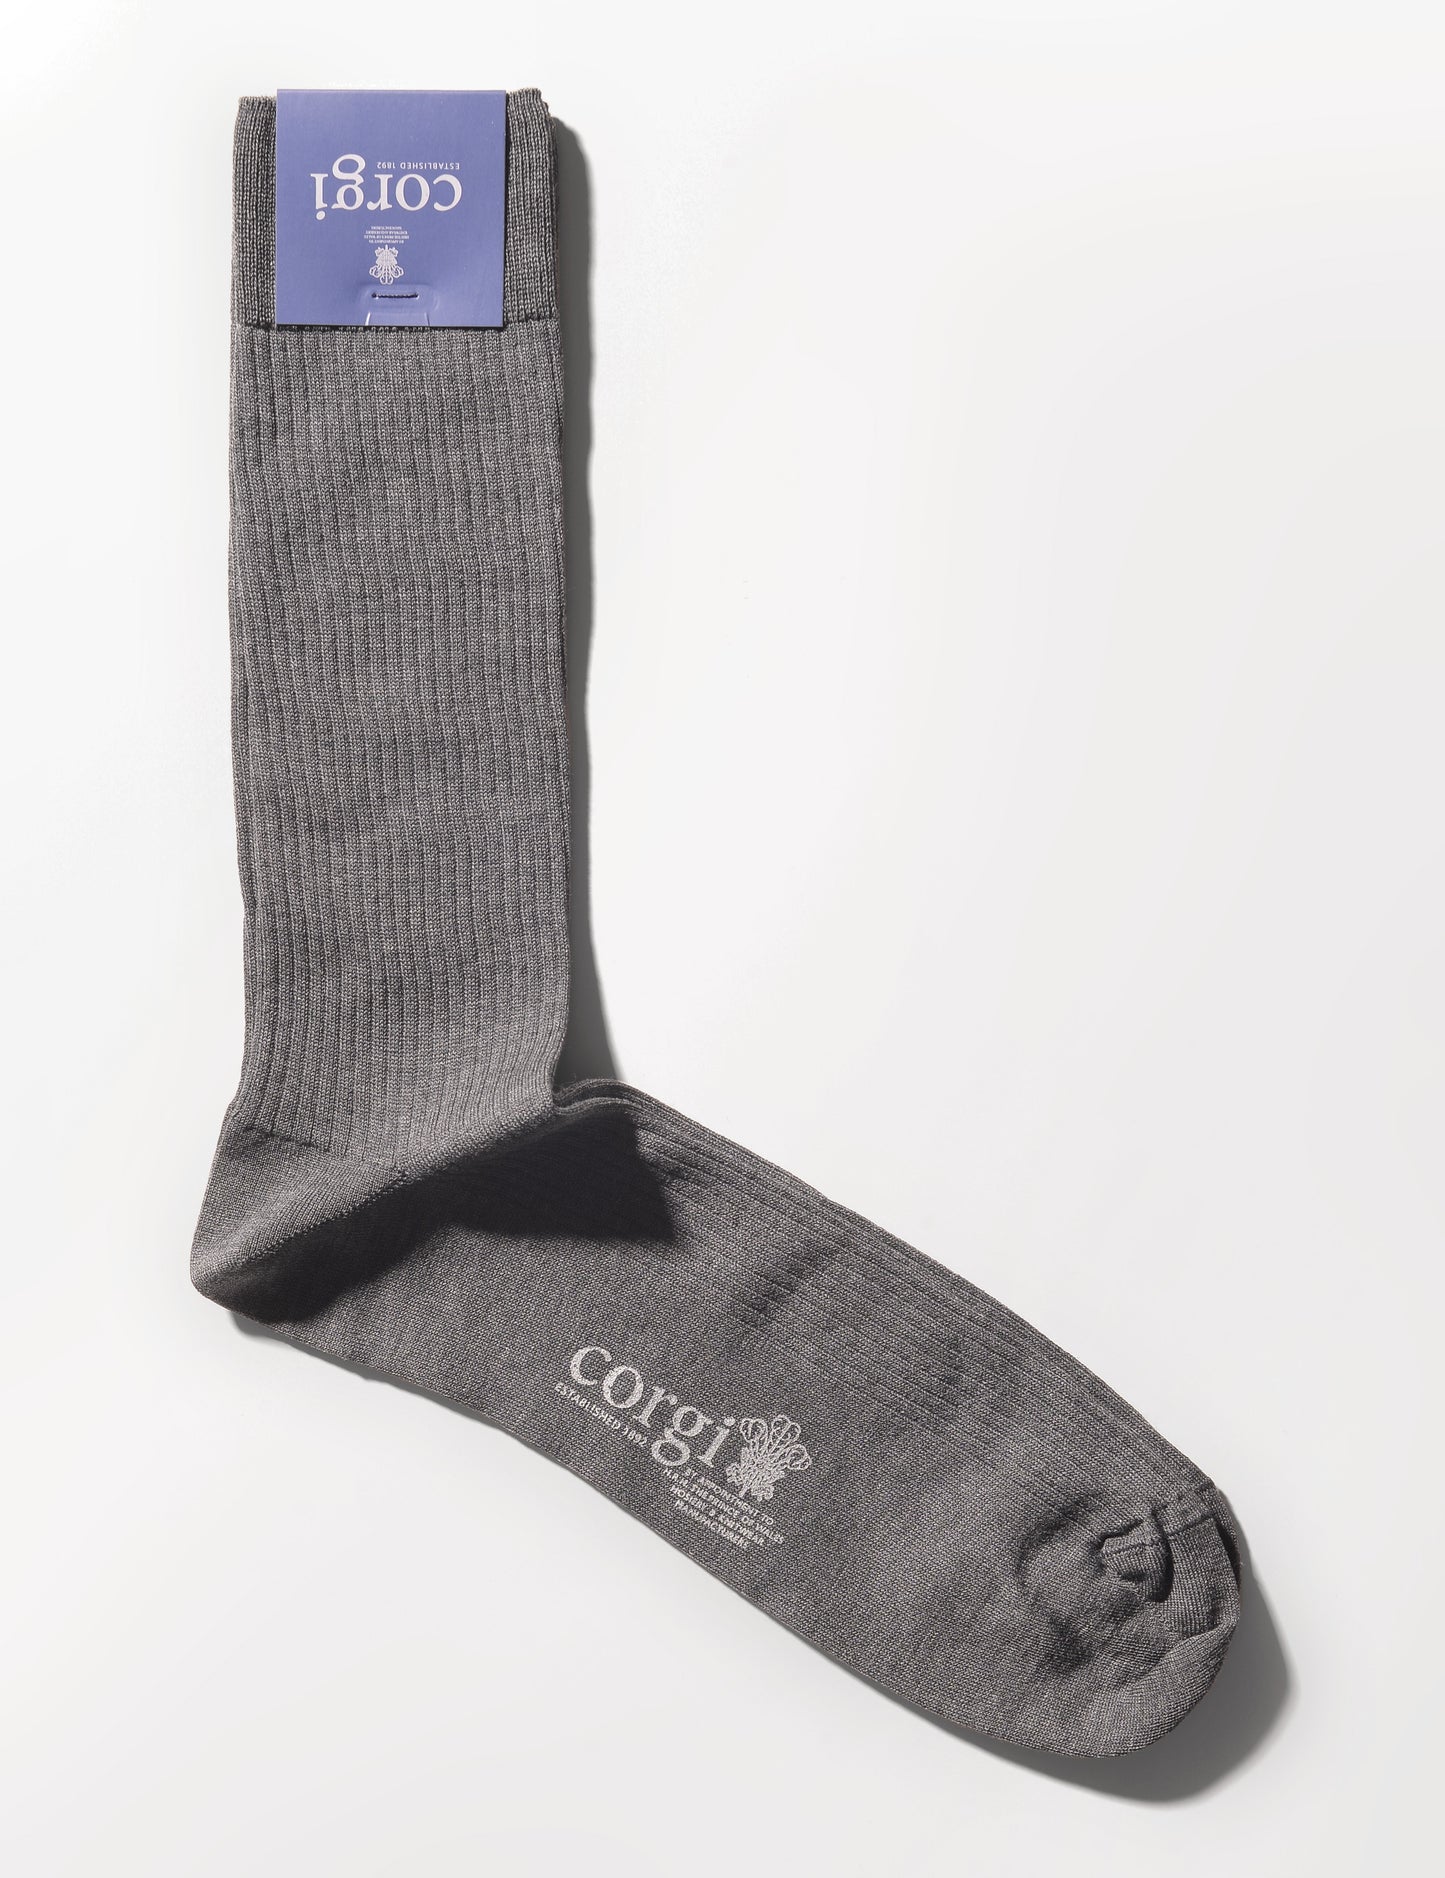 Ribbed Dress Socks in Mercerized Cotton - Charcoal